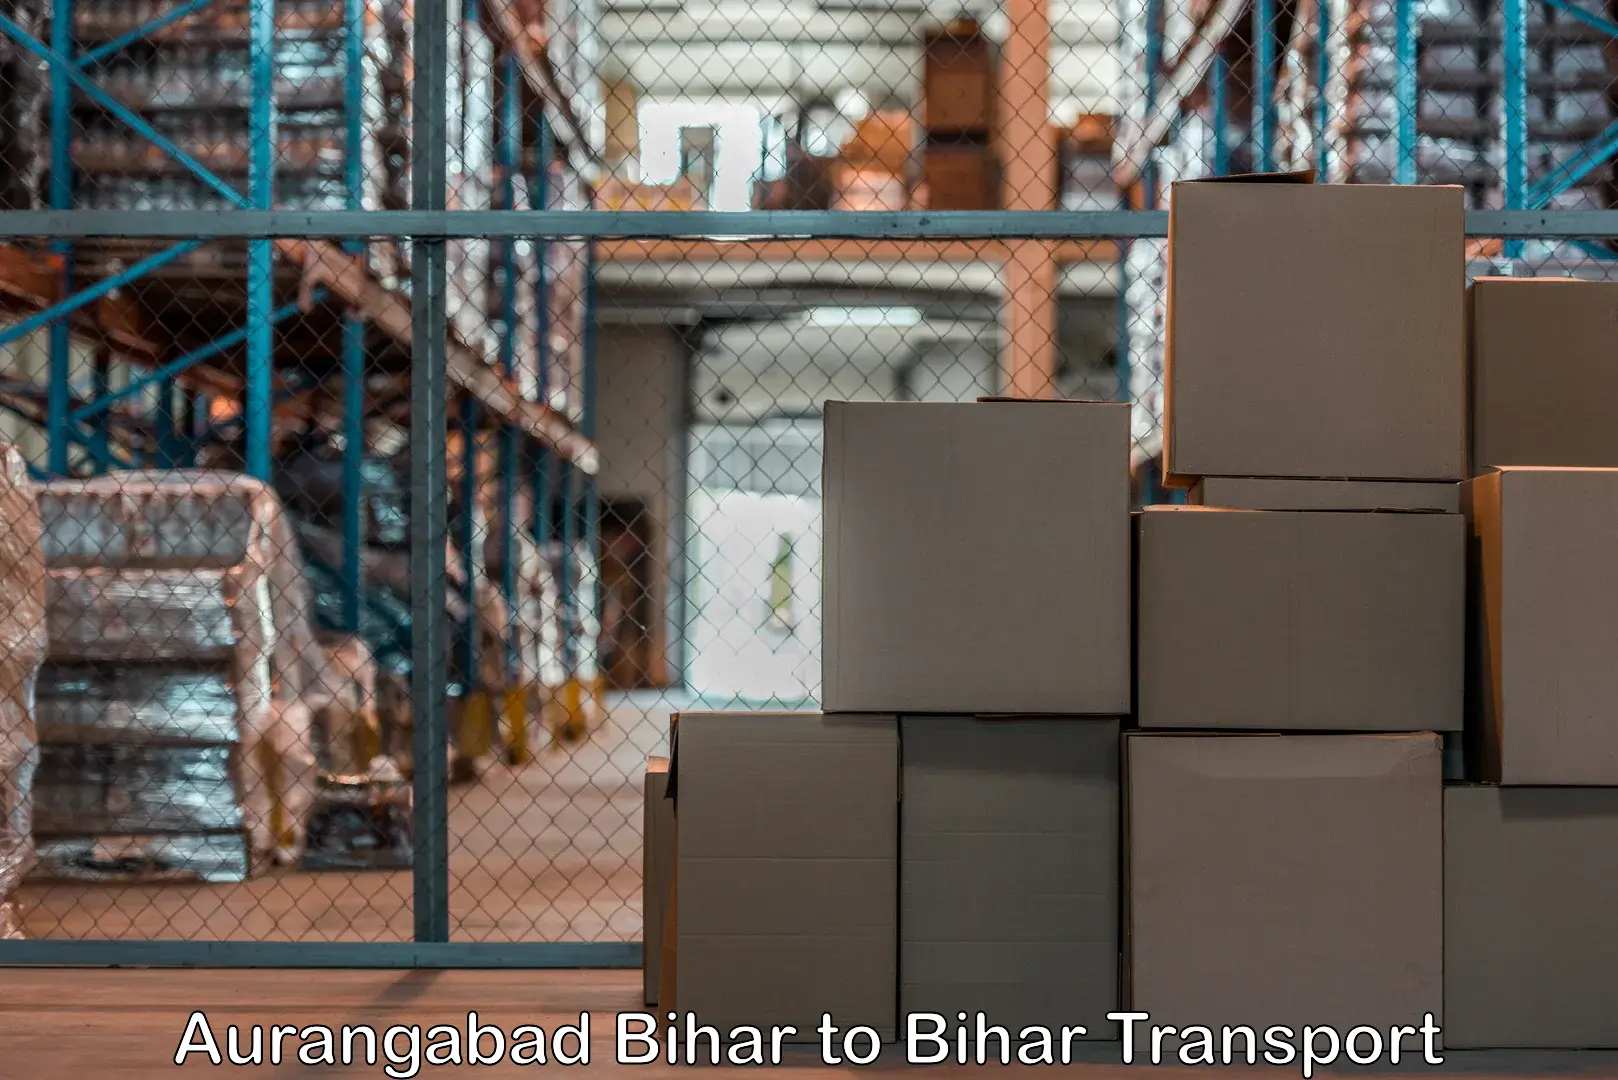 Package delivery services Aurangabad Bihar to Patna